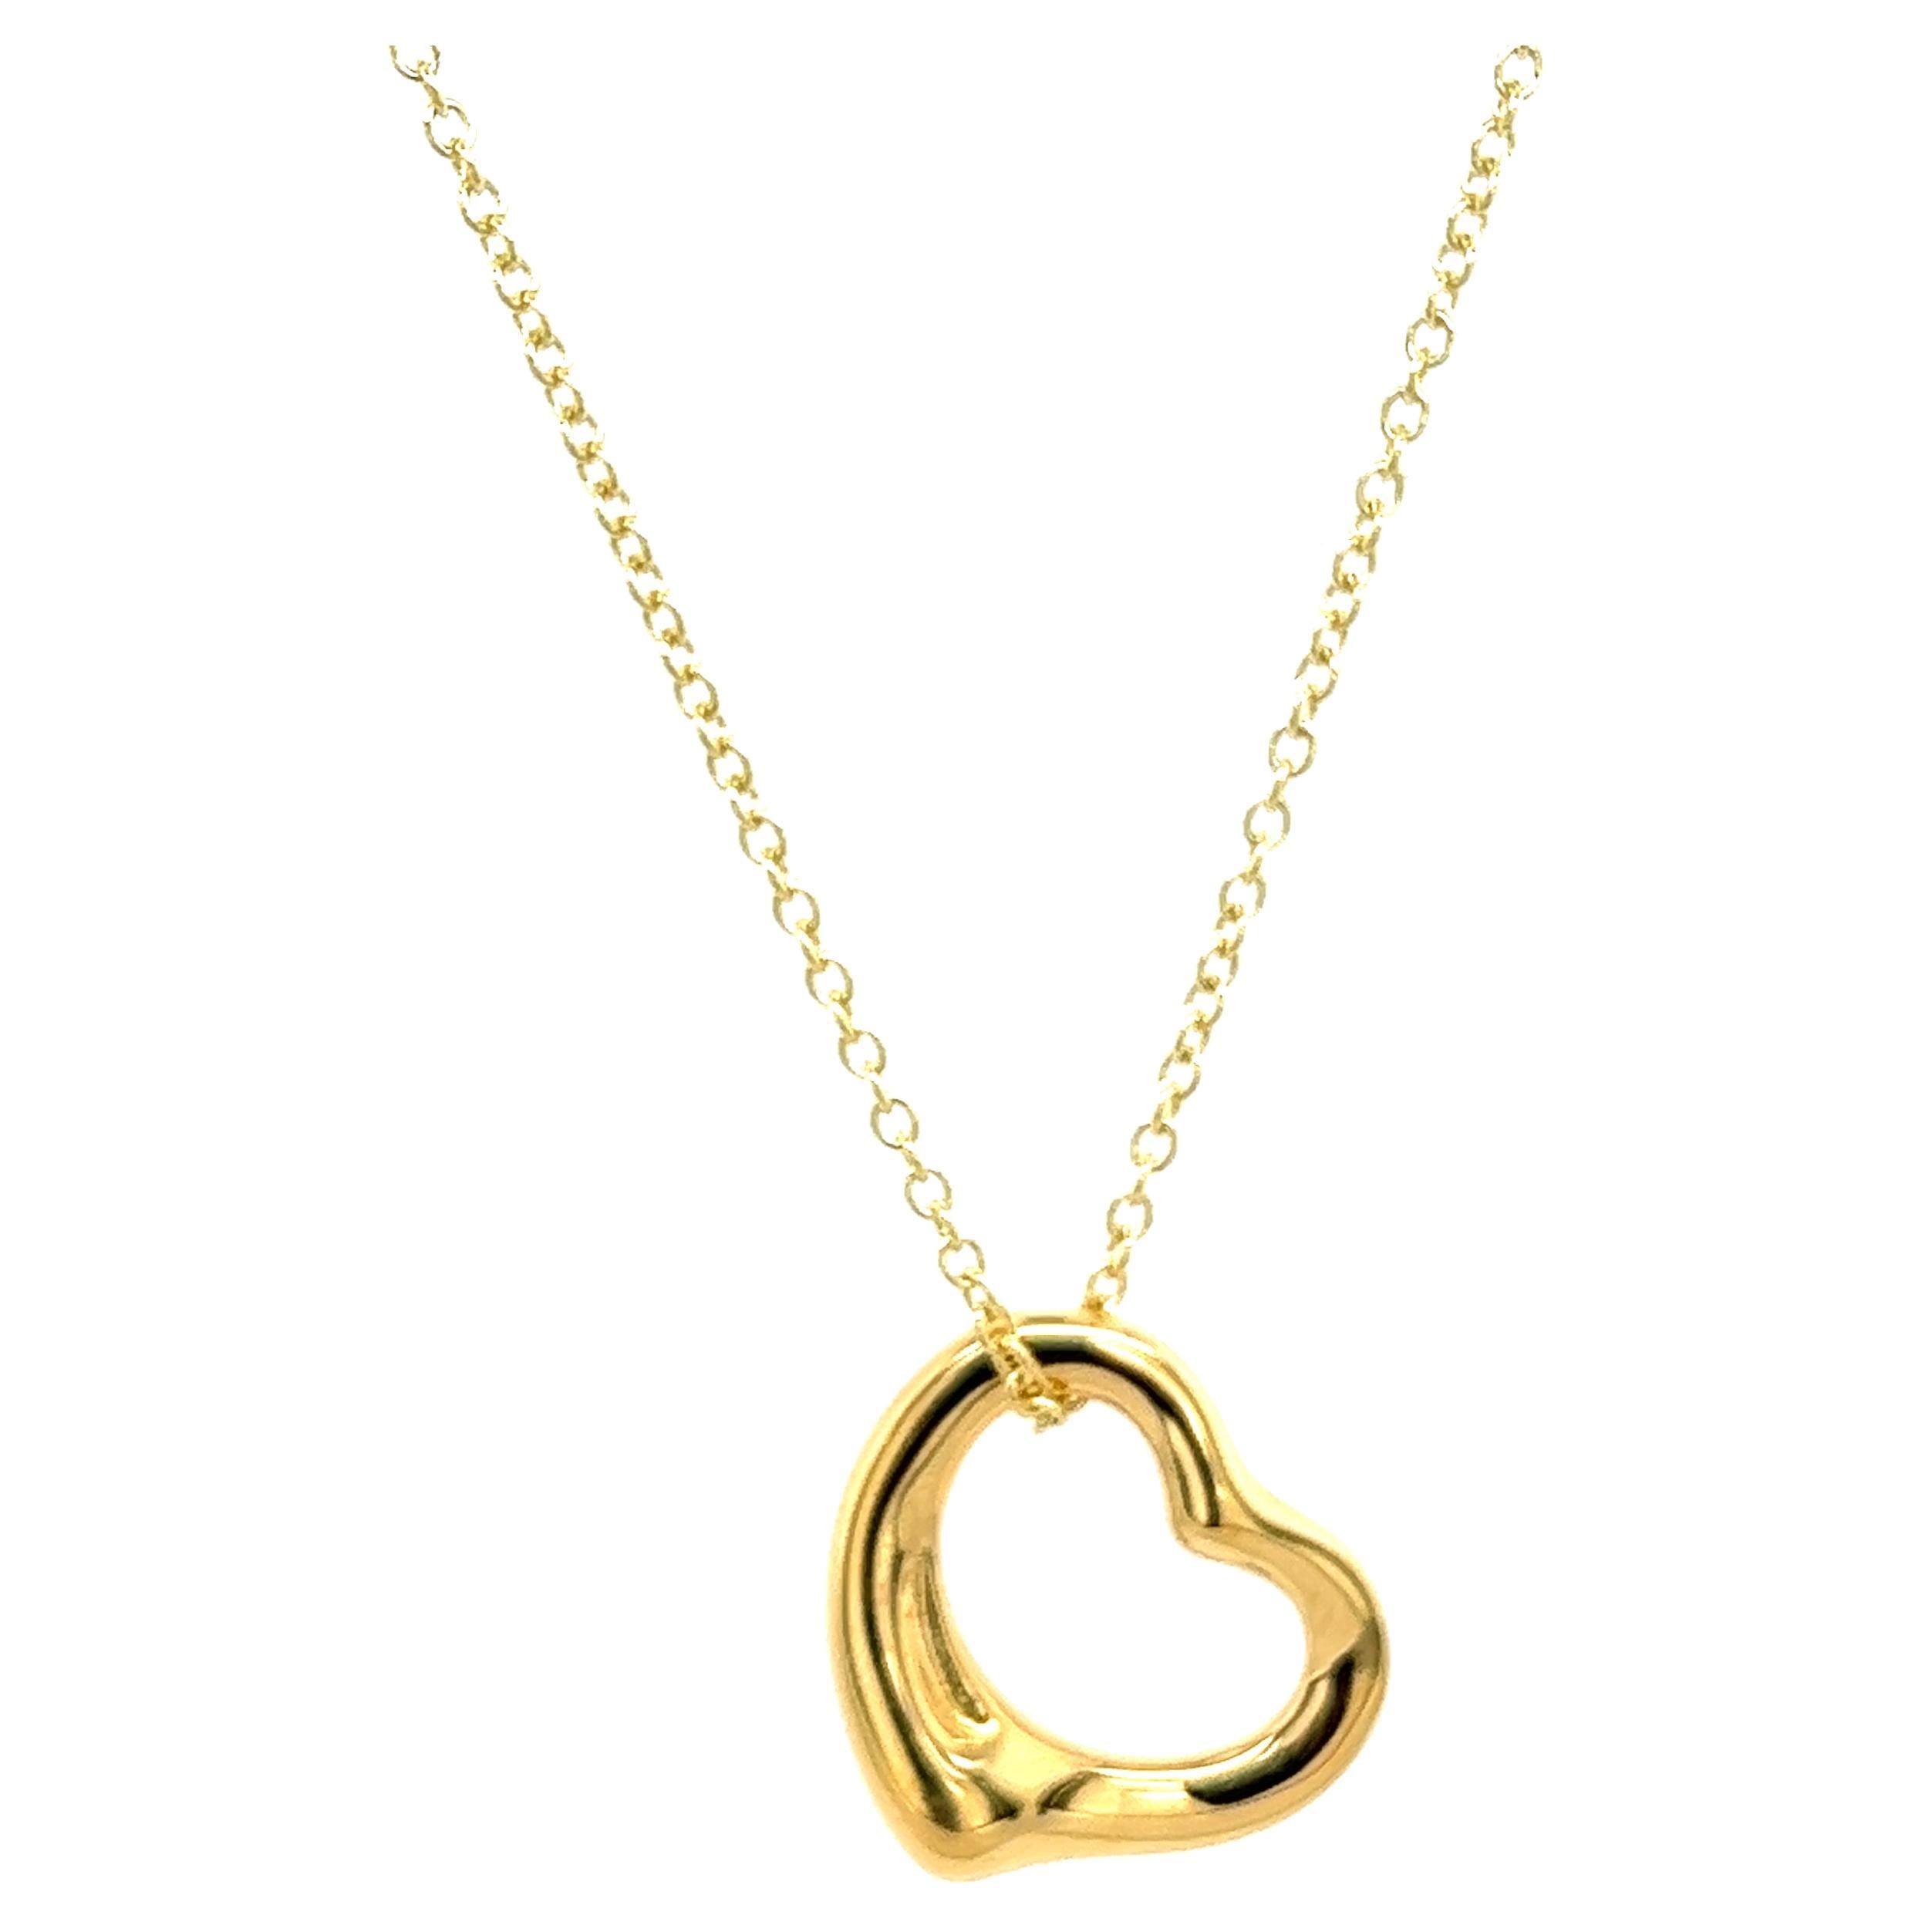 Pendentif en or jaune 18ct en forme de coeur suspendu à une chaîne en or jaune 18ct 20".